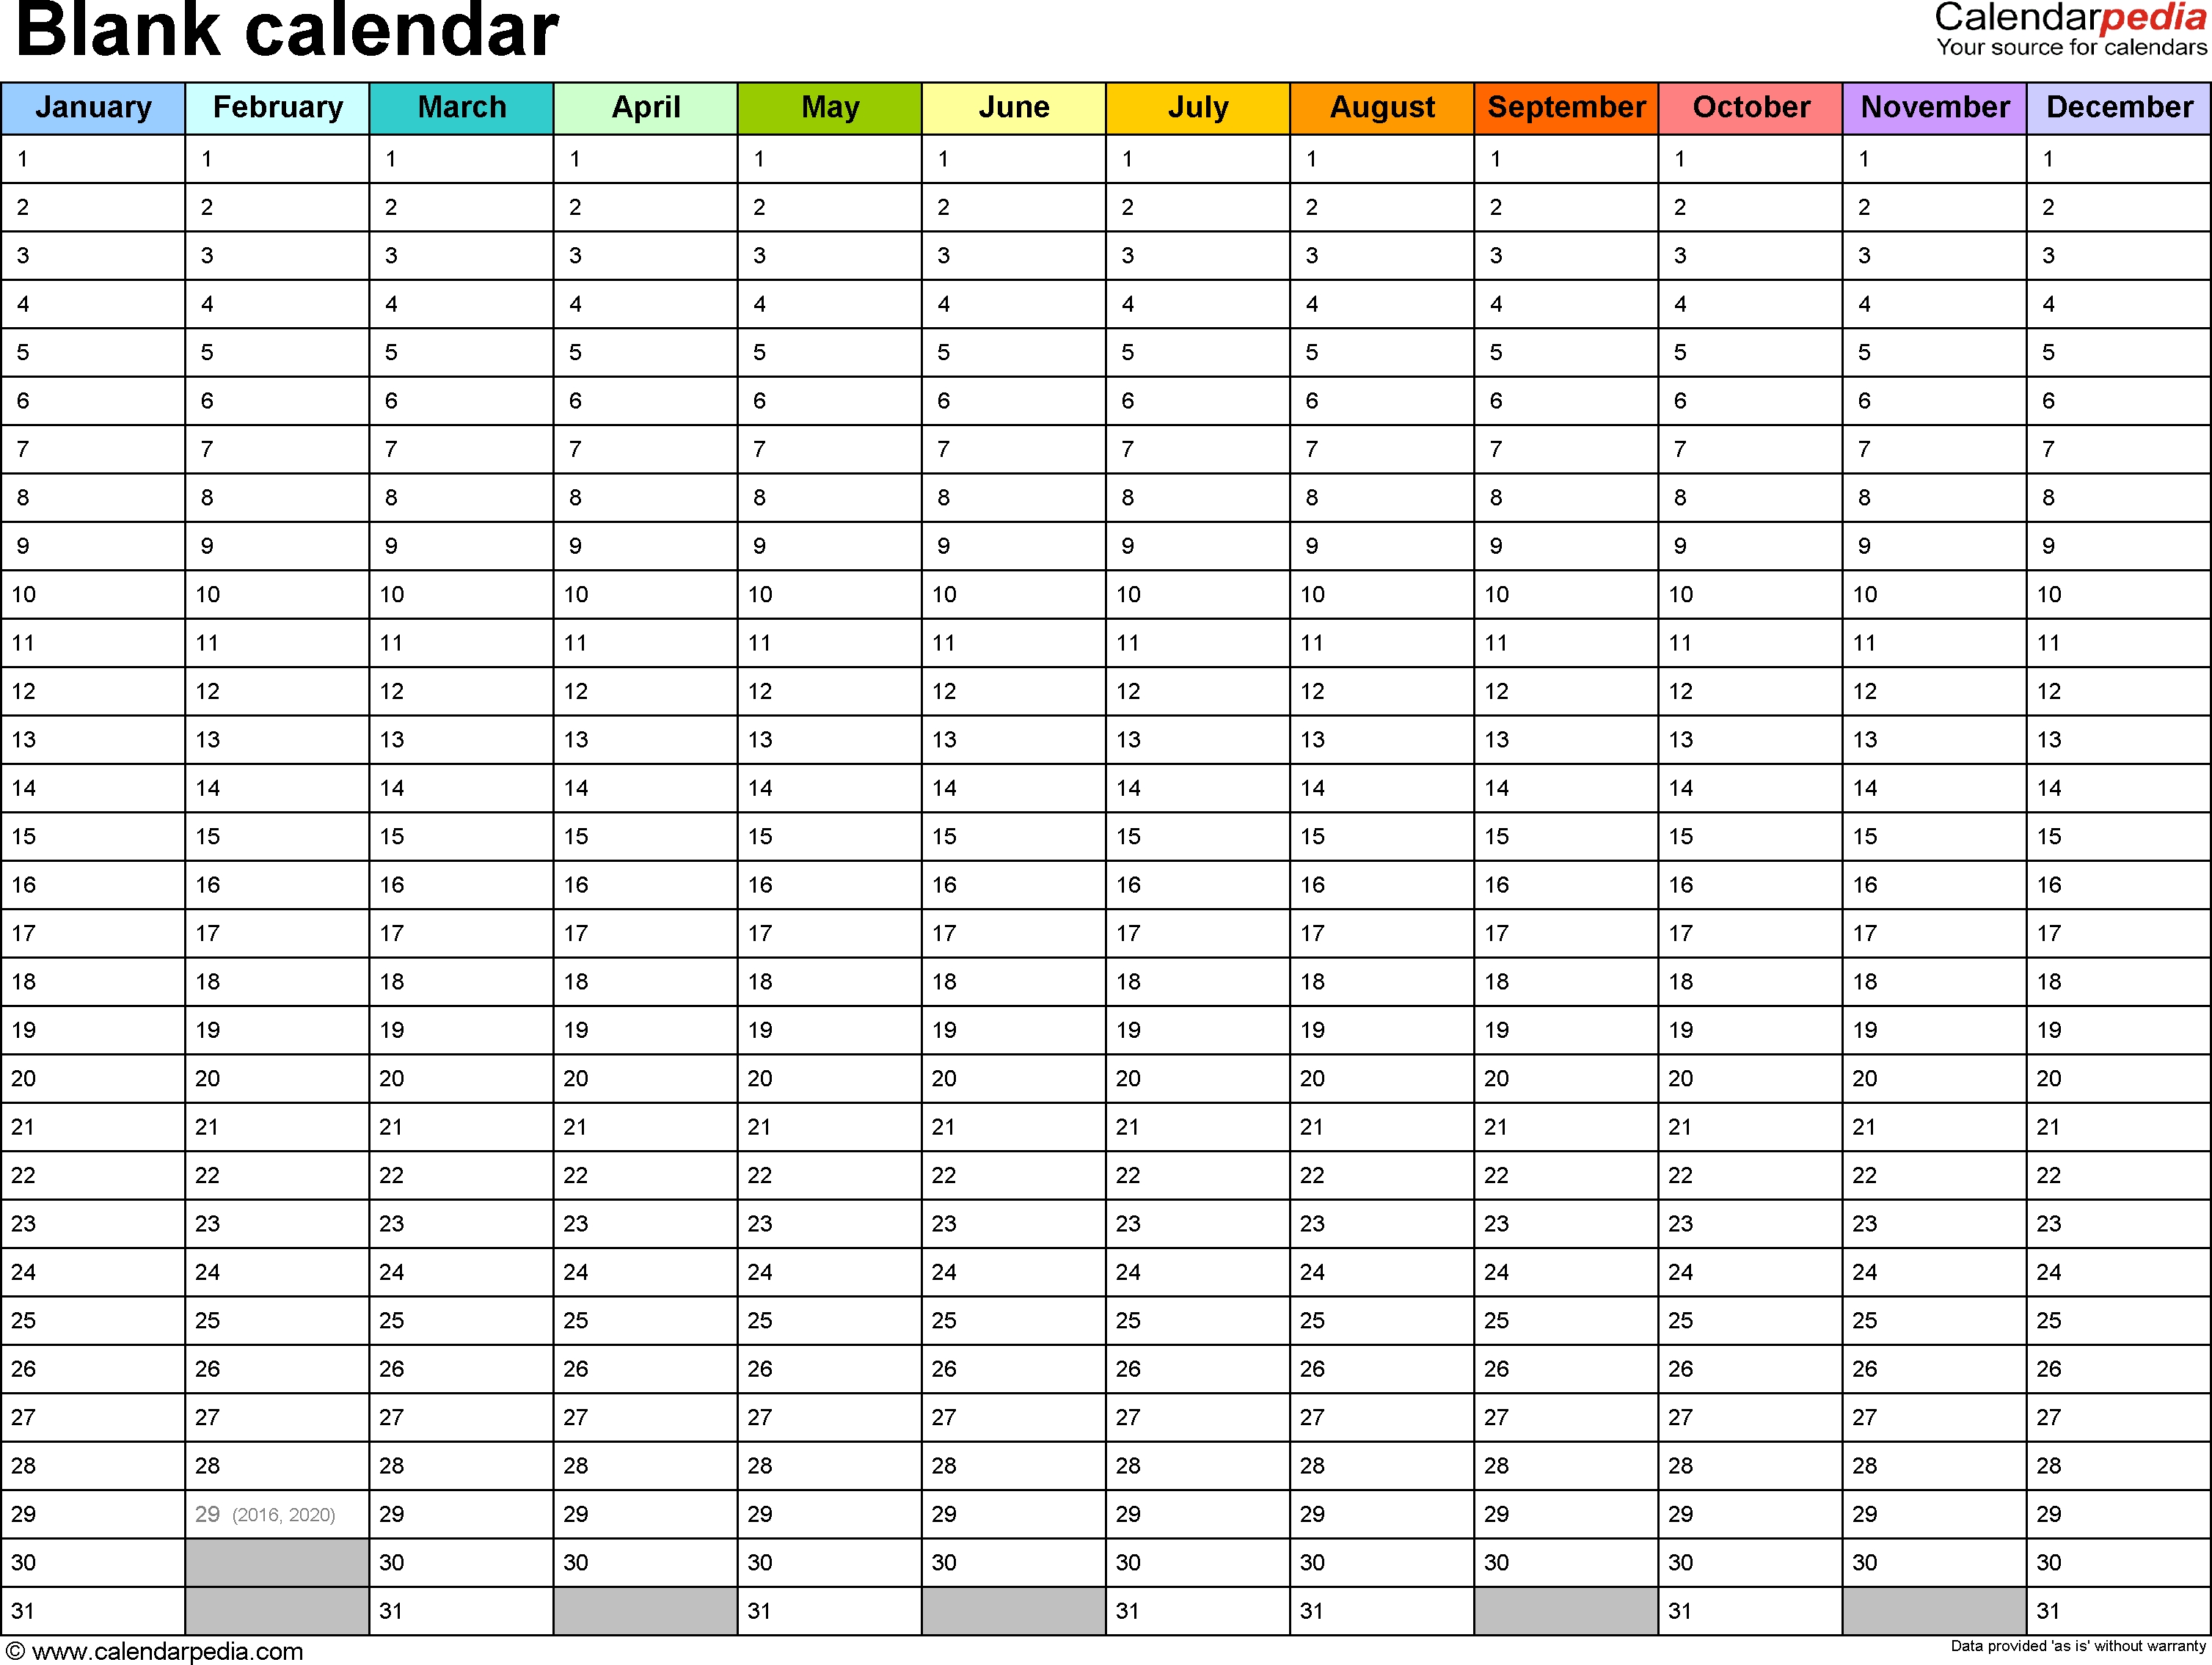 Blank Calendar - 9 Free Printable Microsoft Word Templates inside Blank 3 Month Calendar Template